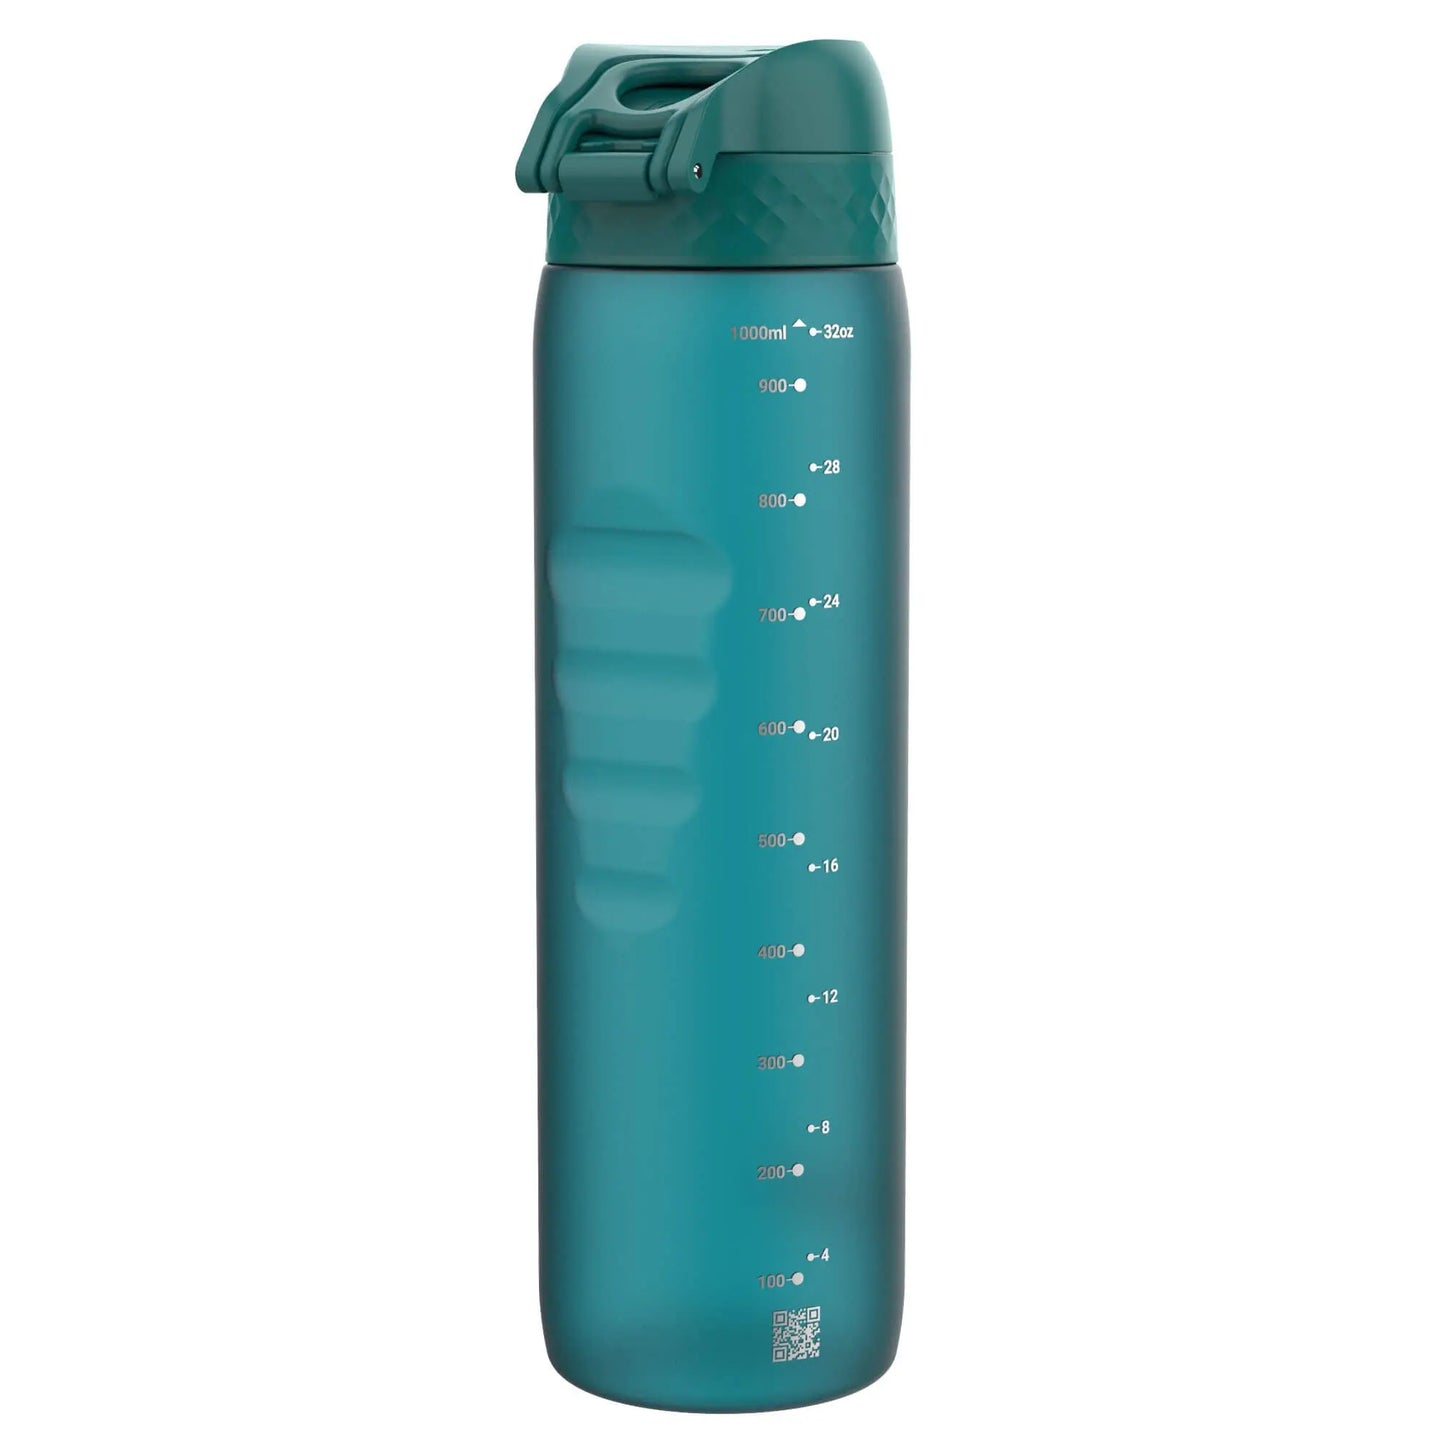 Leak Proof 1 litre Water Bottle, Recyclon™, Aqua, 1L Ion8